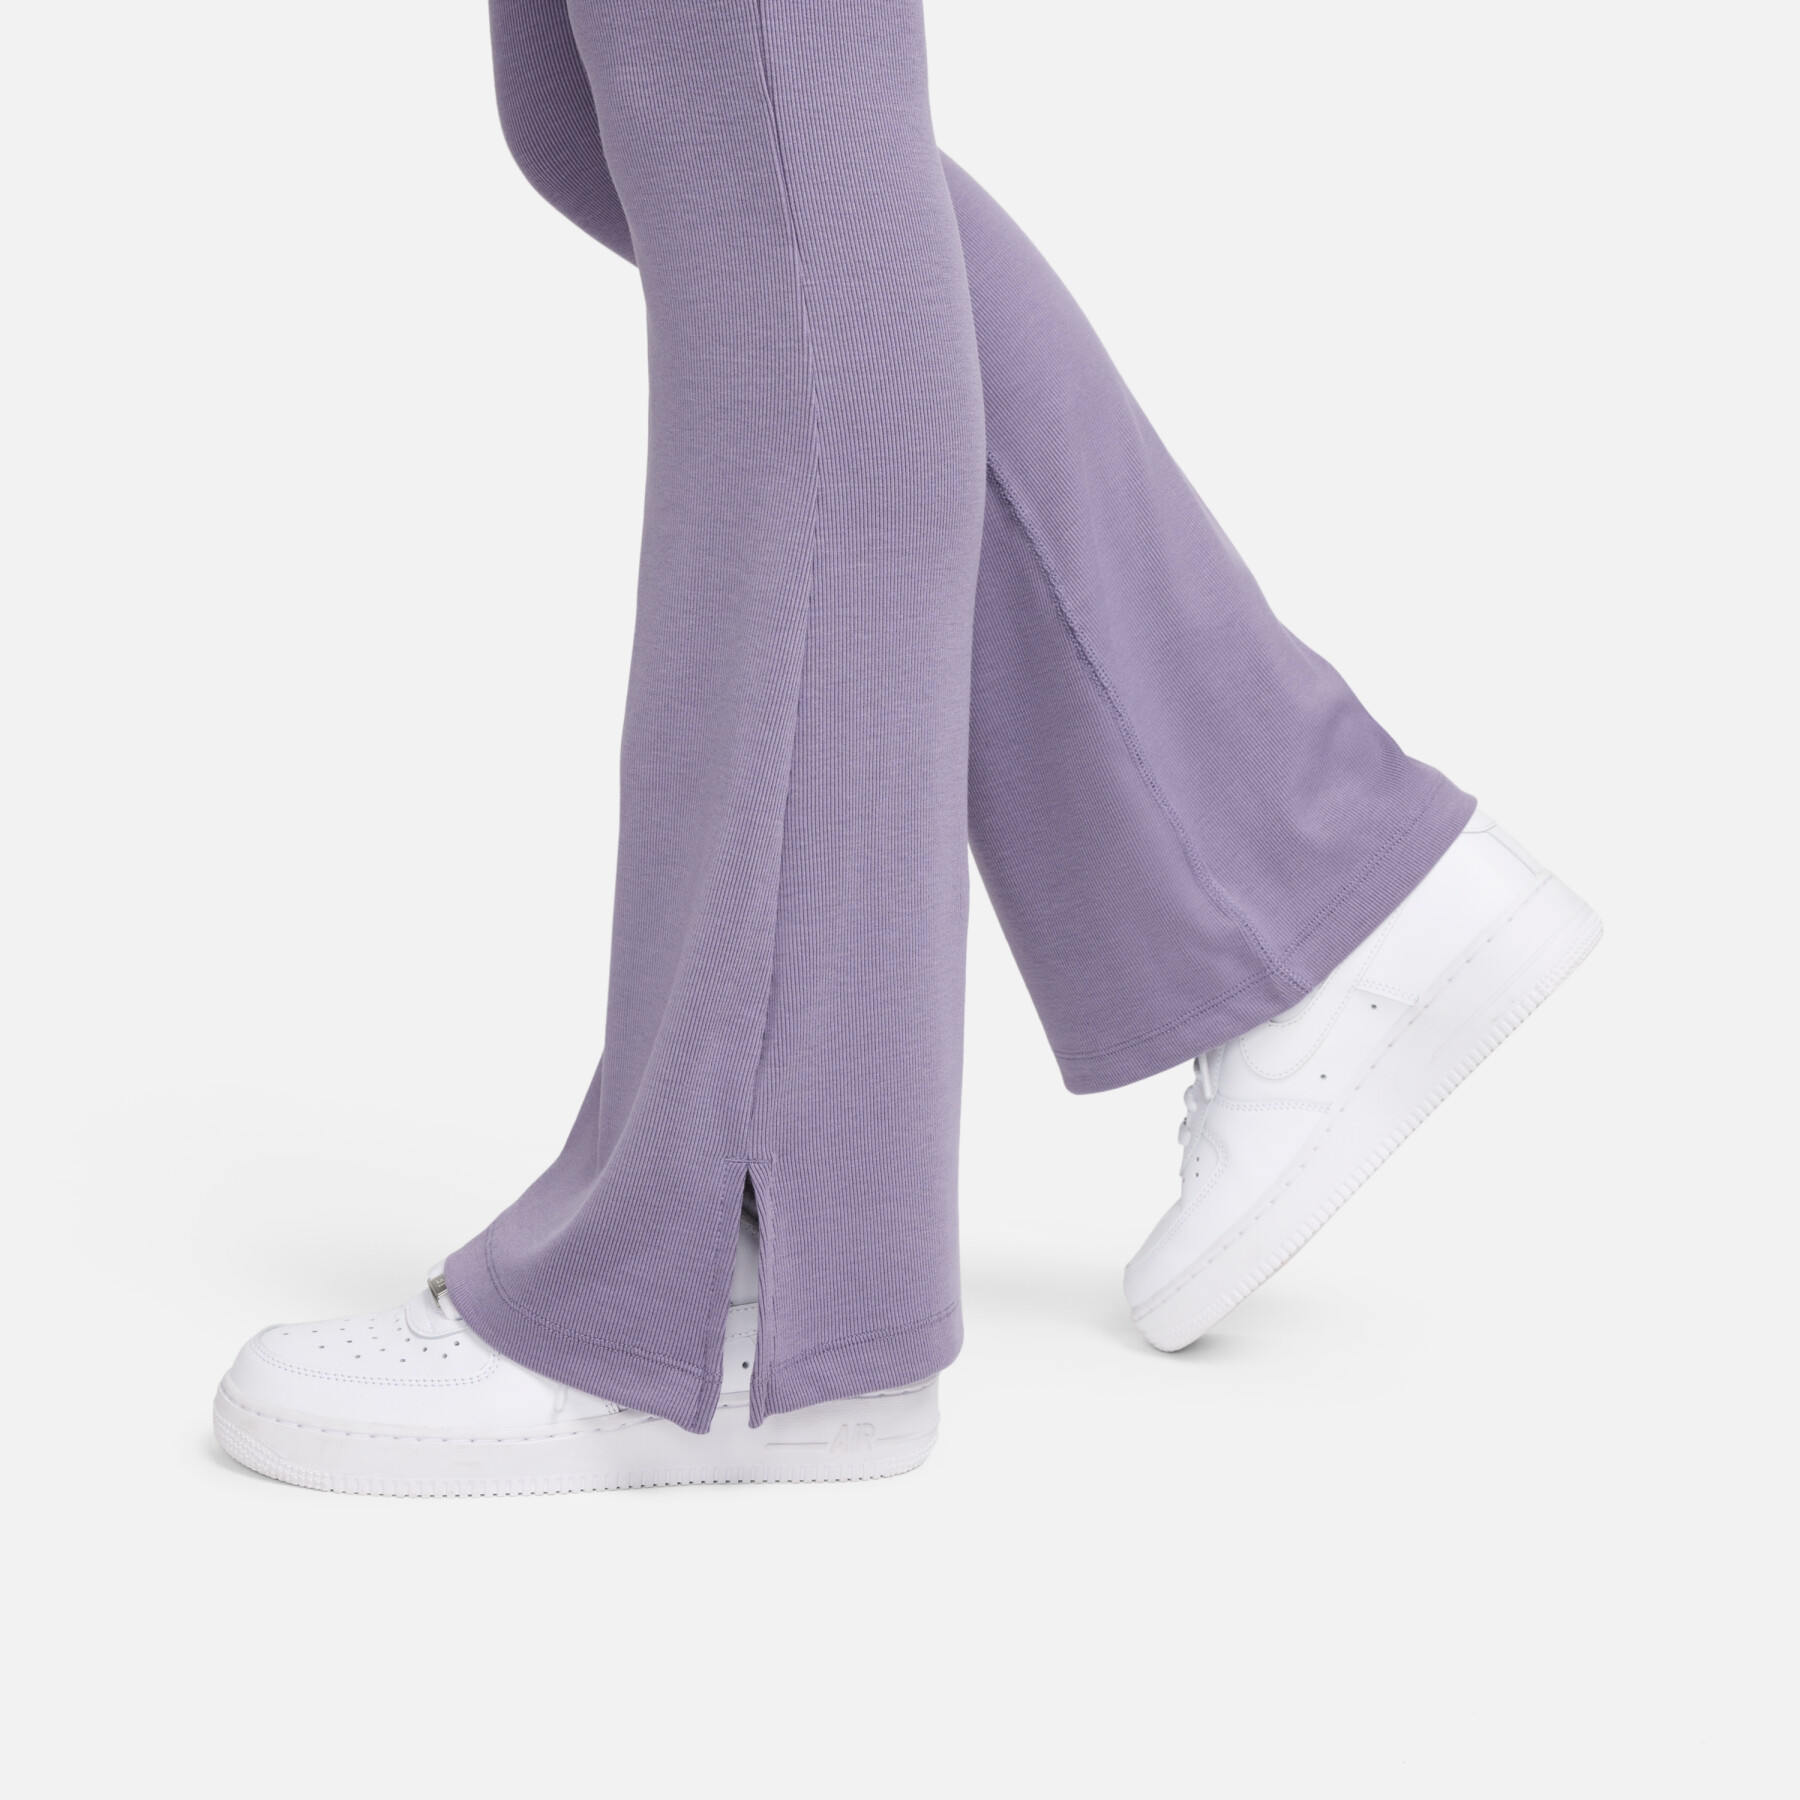 Leggings largas para mulher Nike Chill Knit